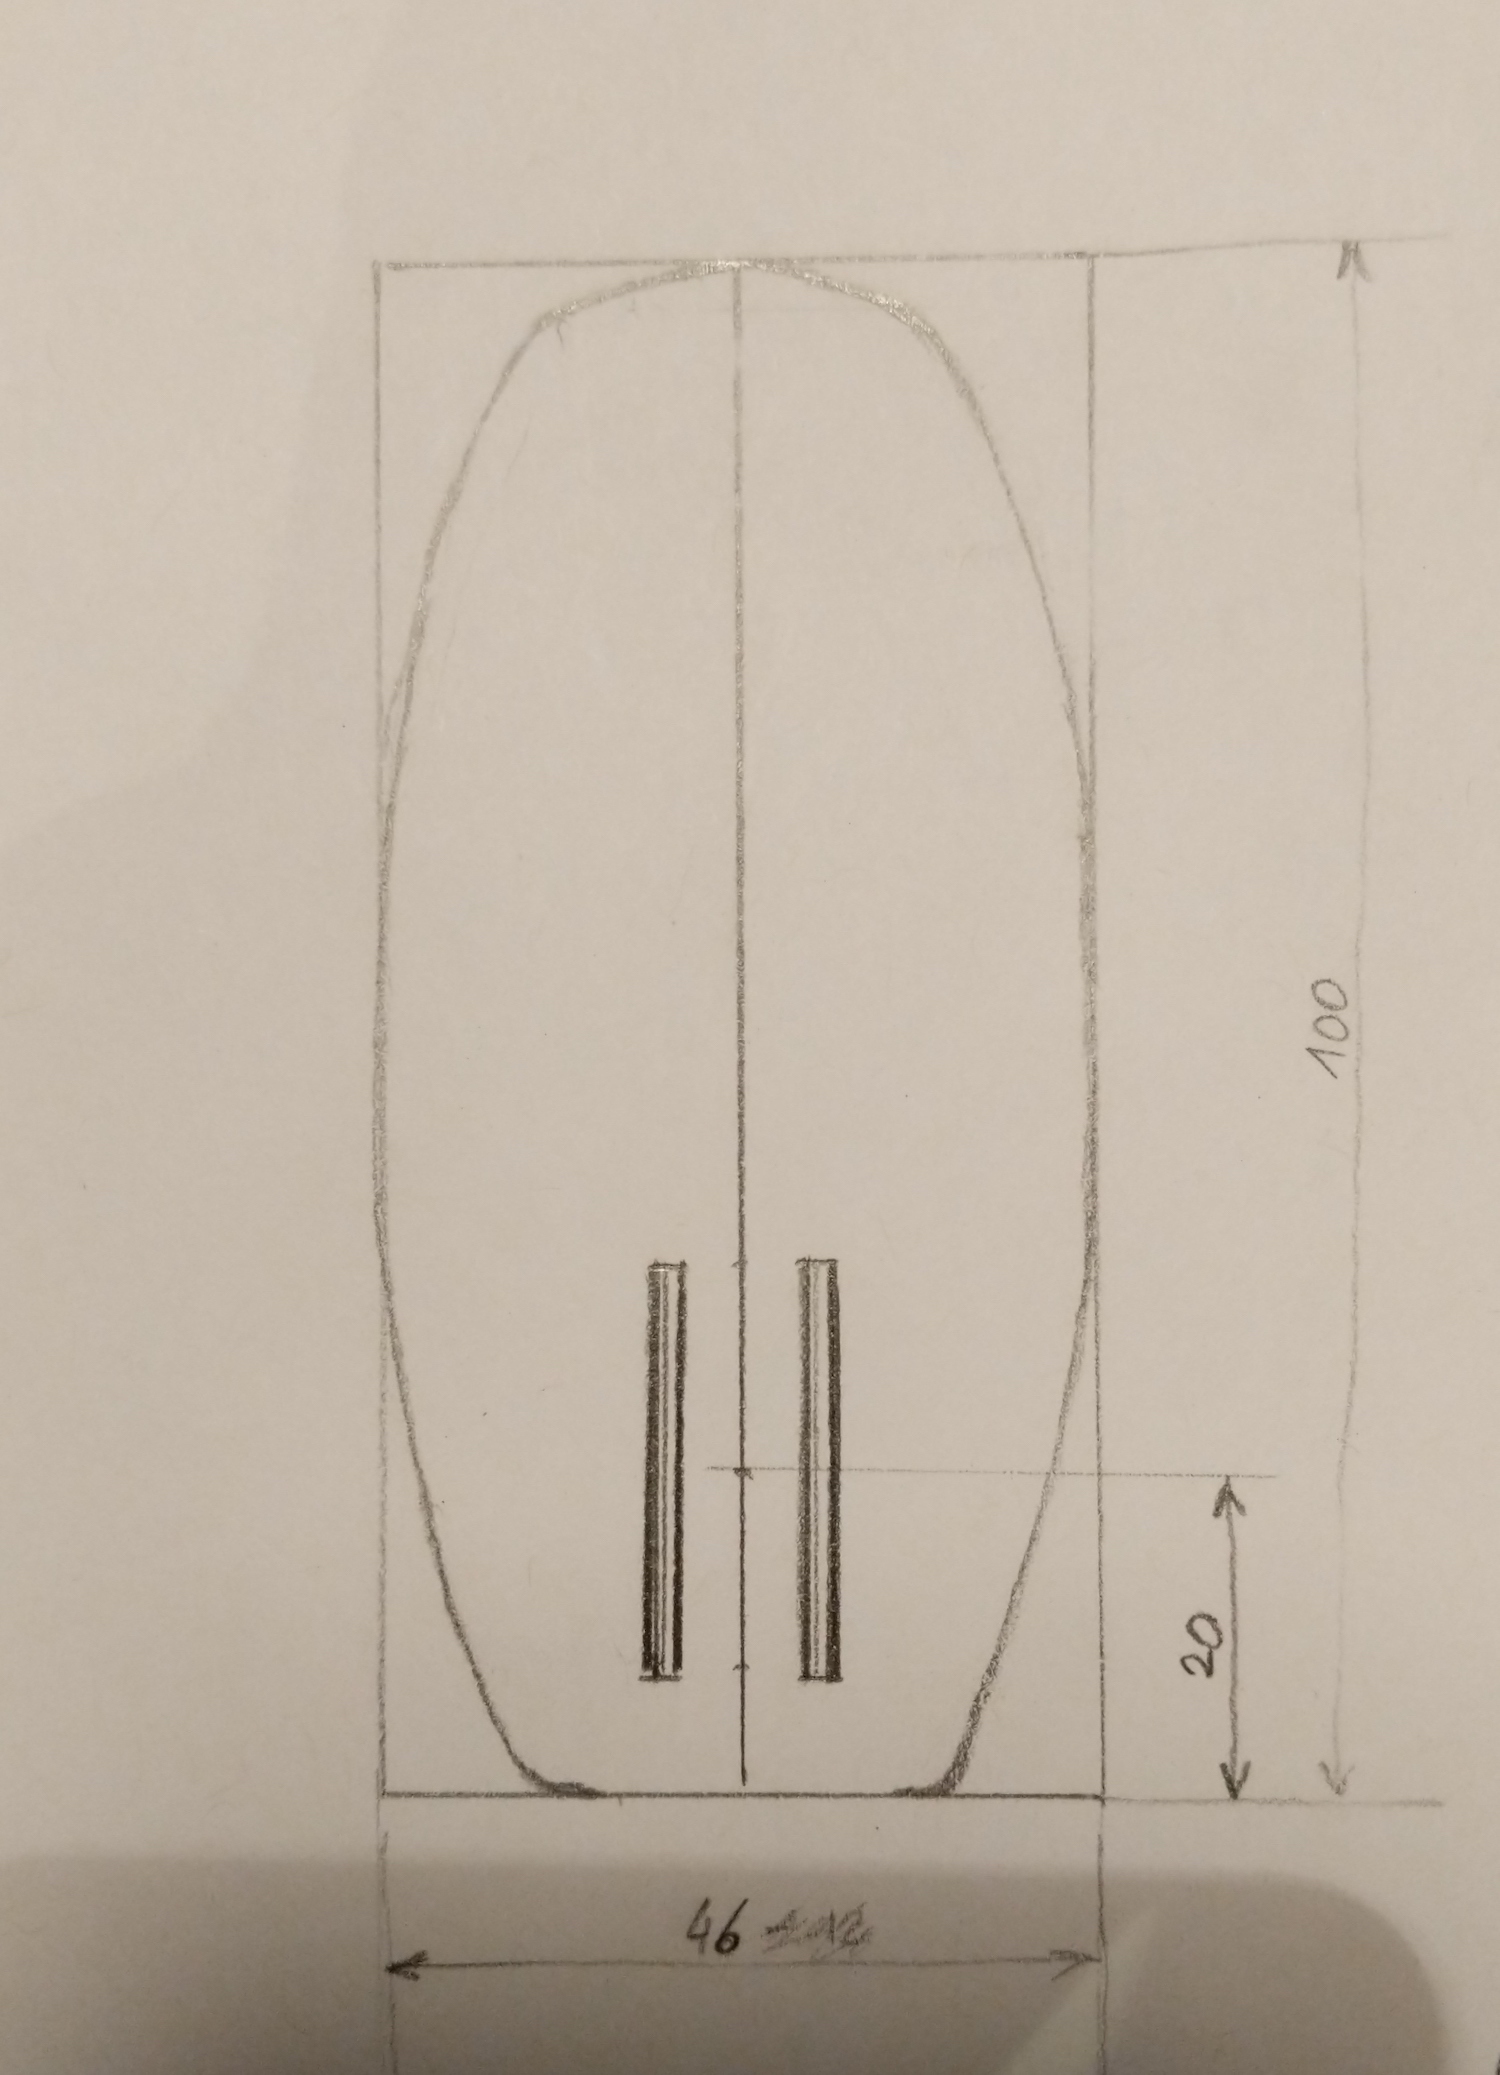 Balsa surfboard sketch on paper